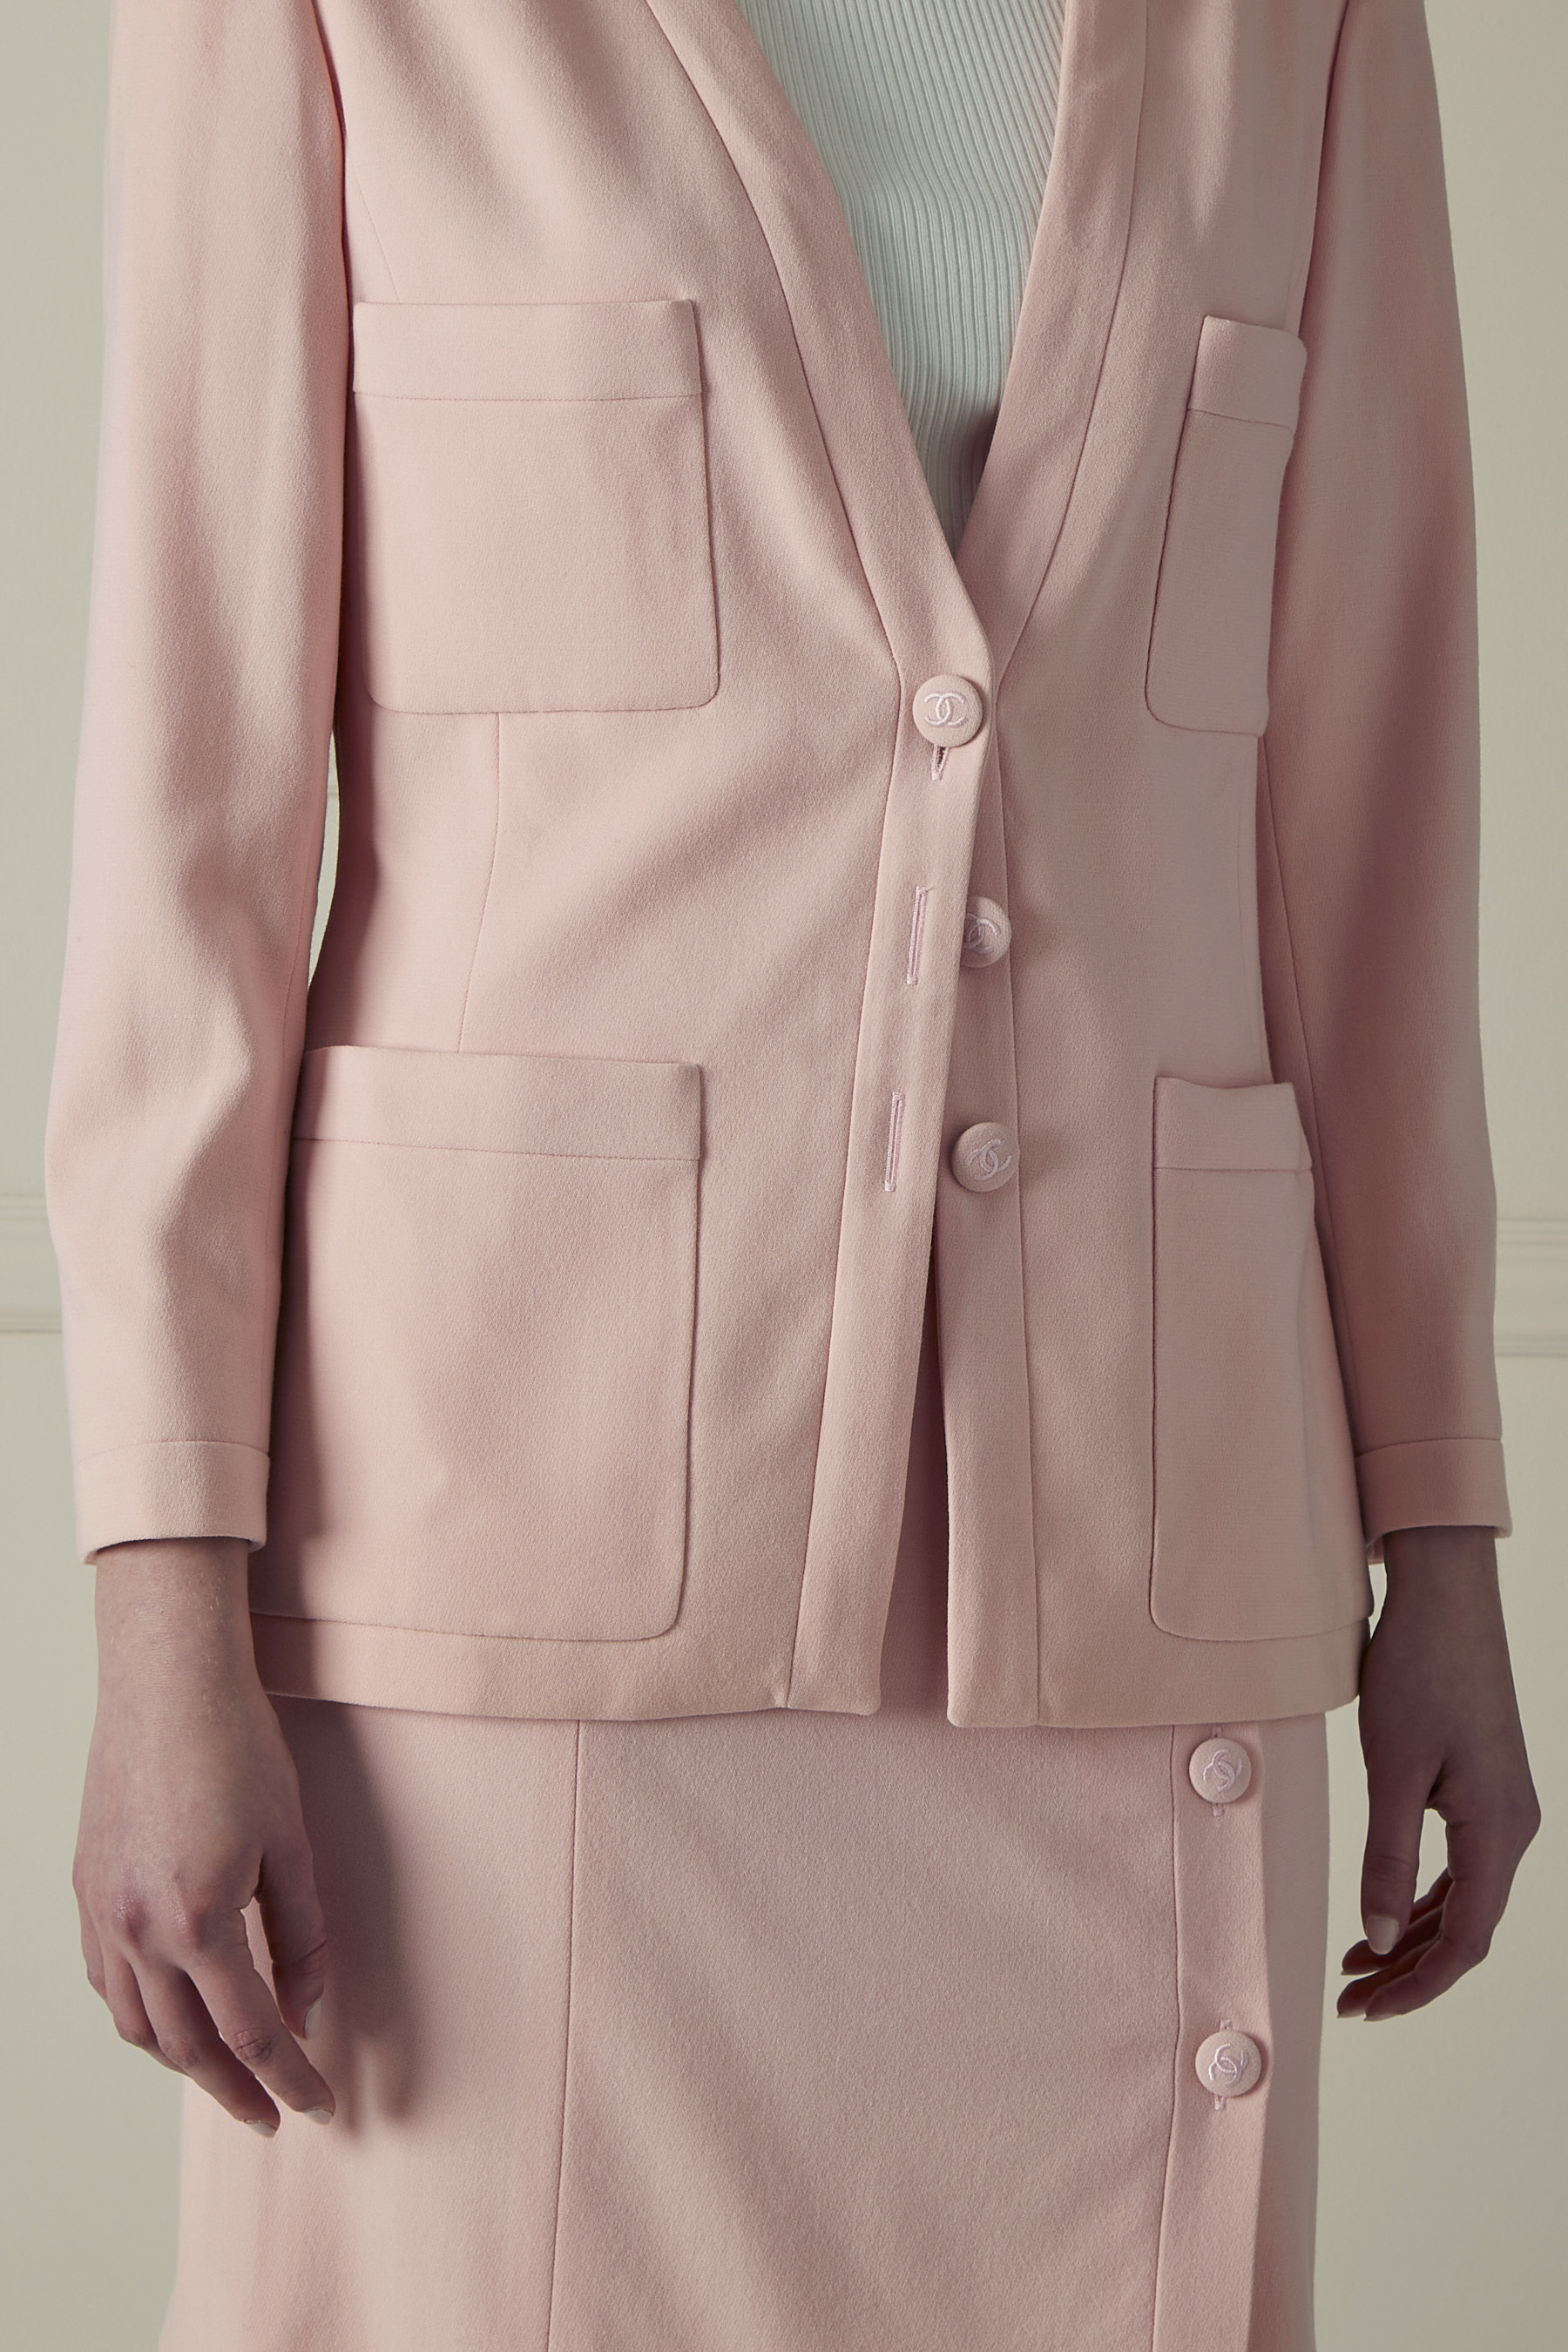 Chanel Pink Wool & Denim Skirt Suit Set 60CHW-139